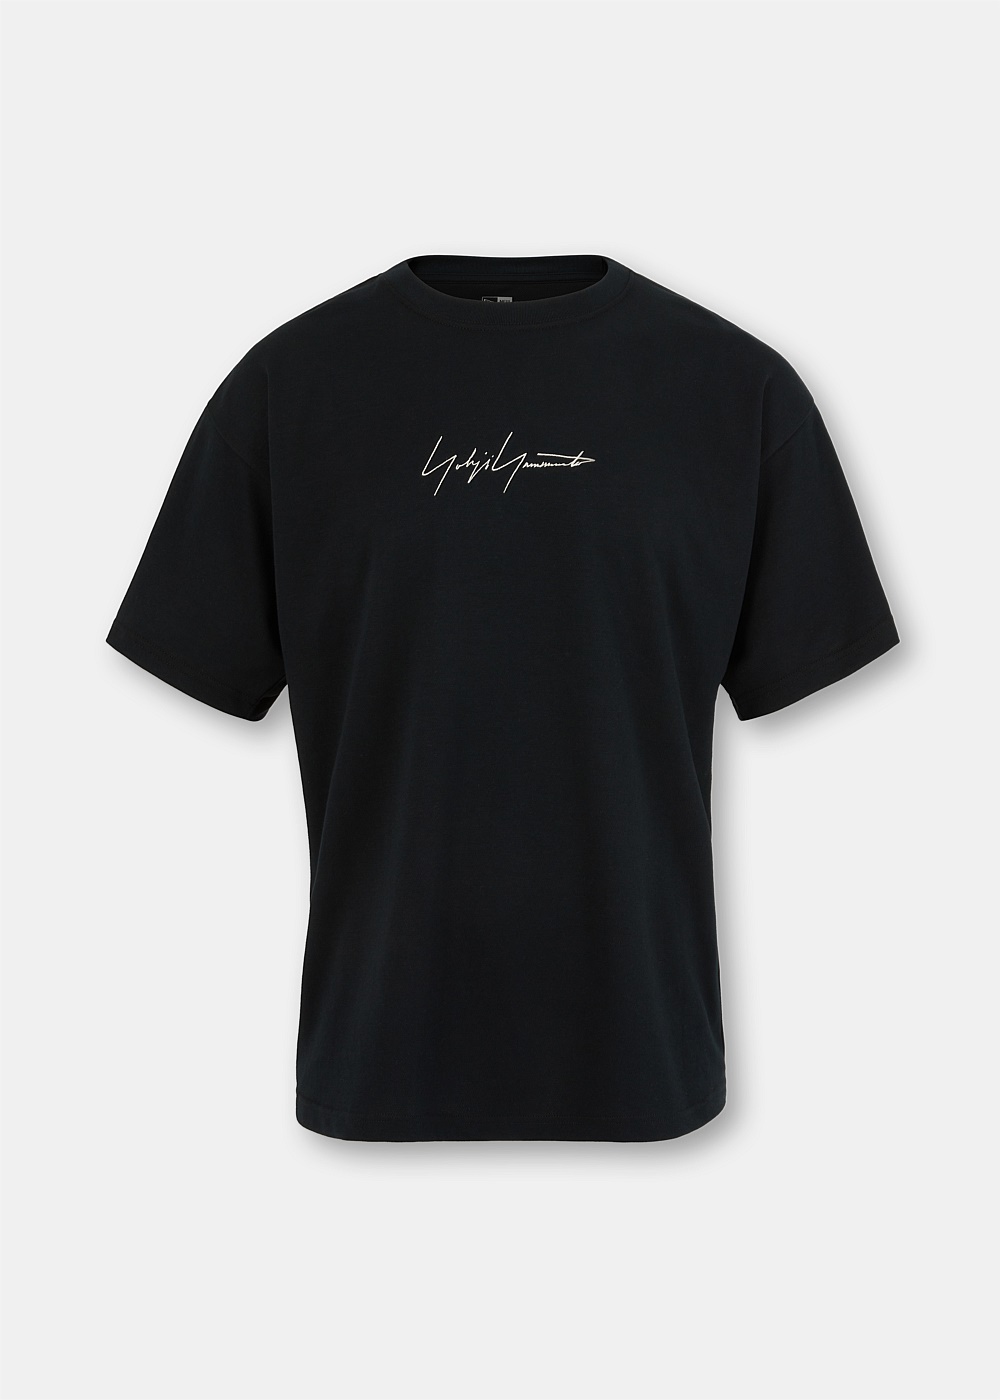 Yohji YamamotoX New Era Short Sleeve T-Shirt